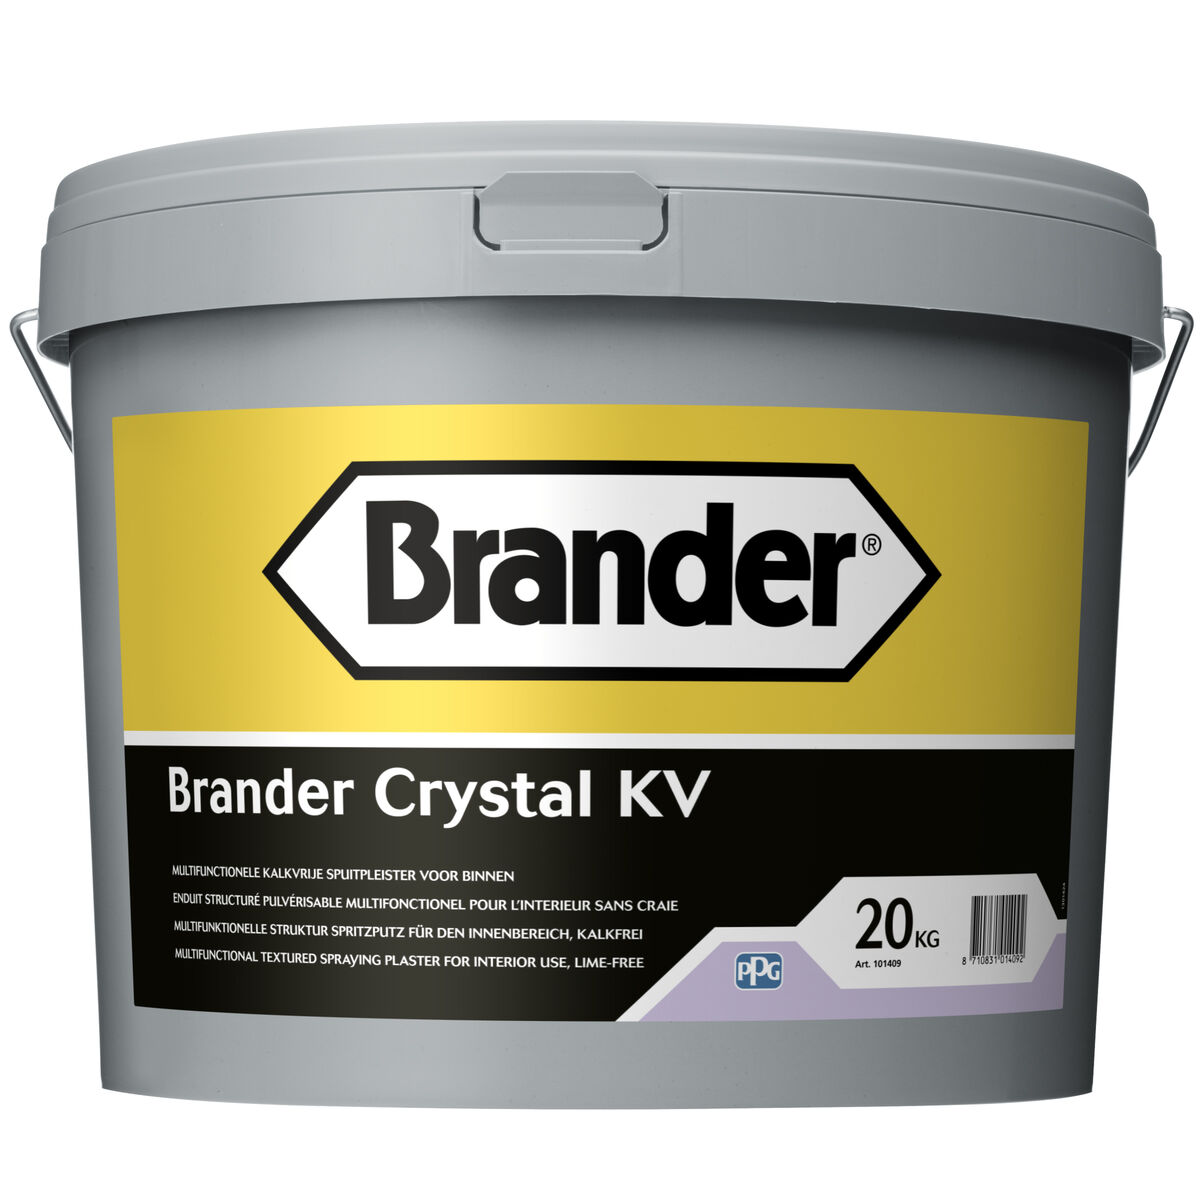 Brander Crystal KV